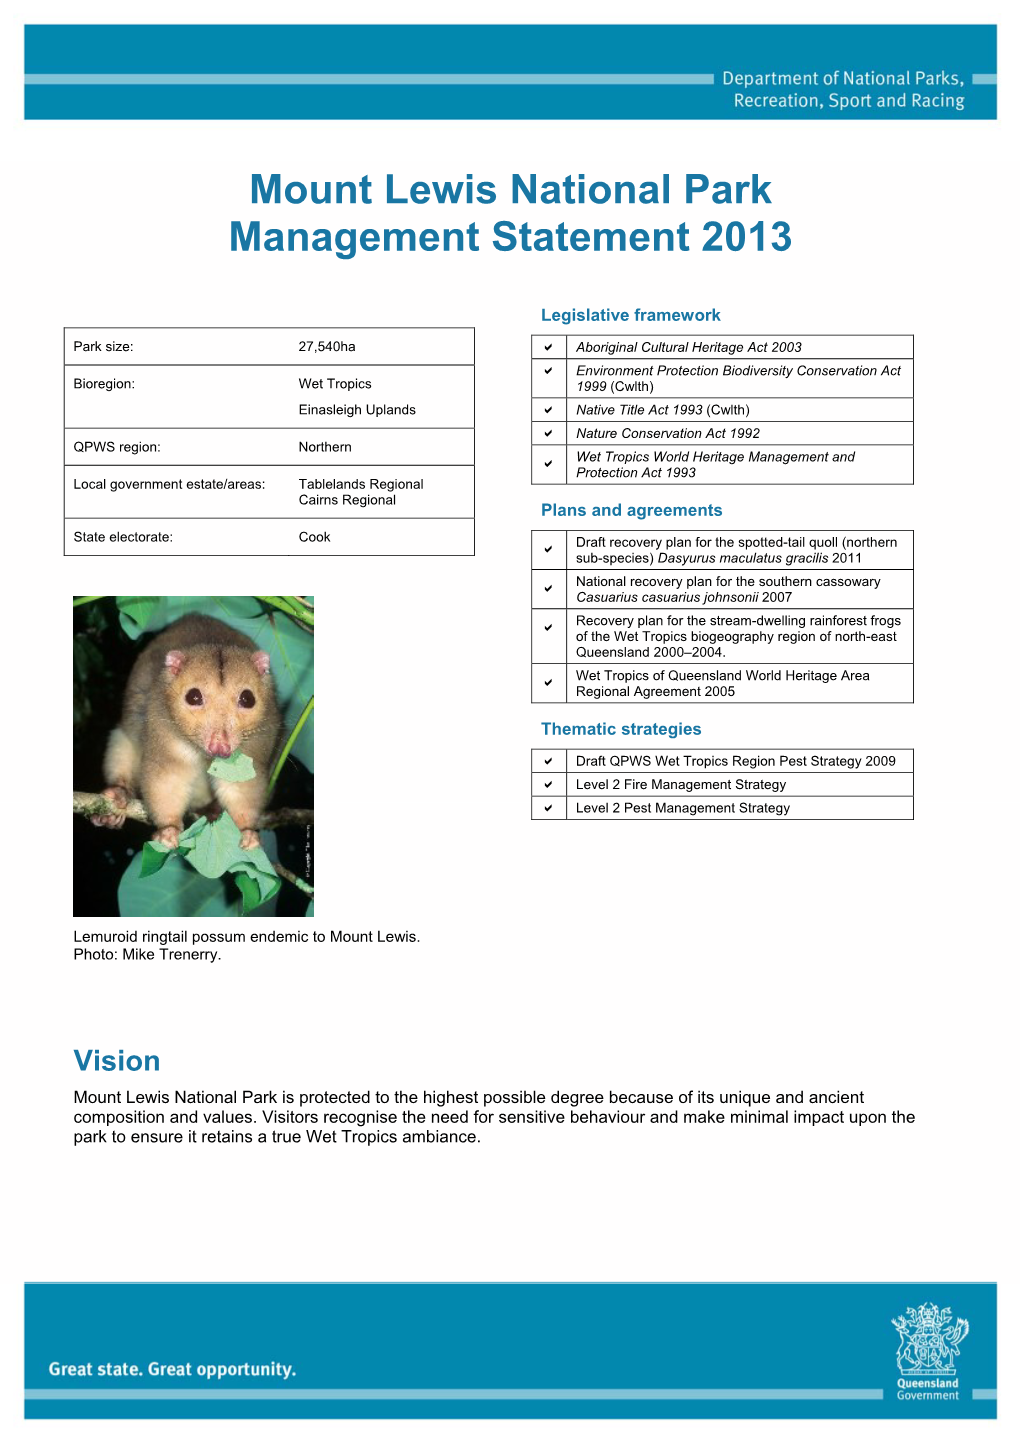 Mount Lewis National Park Management Statement 2013